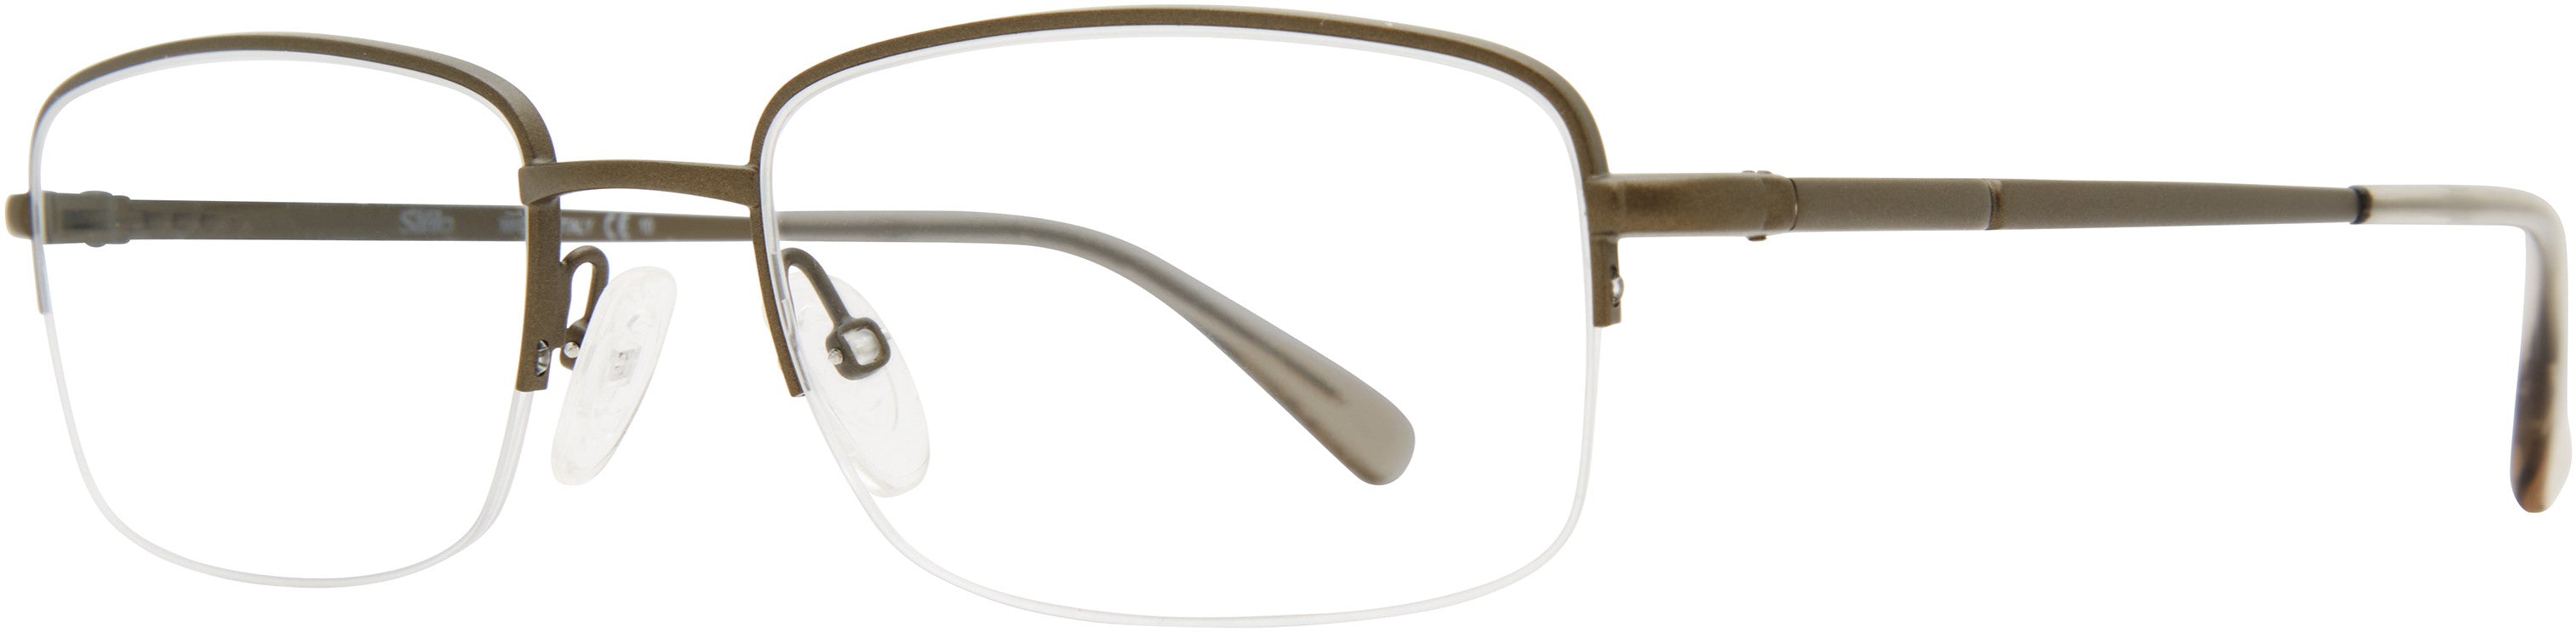  Elasta 7244 Rectangular Eyeglasses 0IS7-0IS7  Antique Brown (00 Demo Lens)